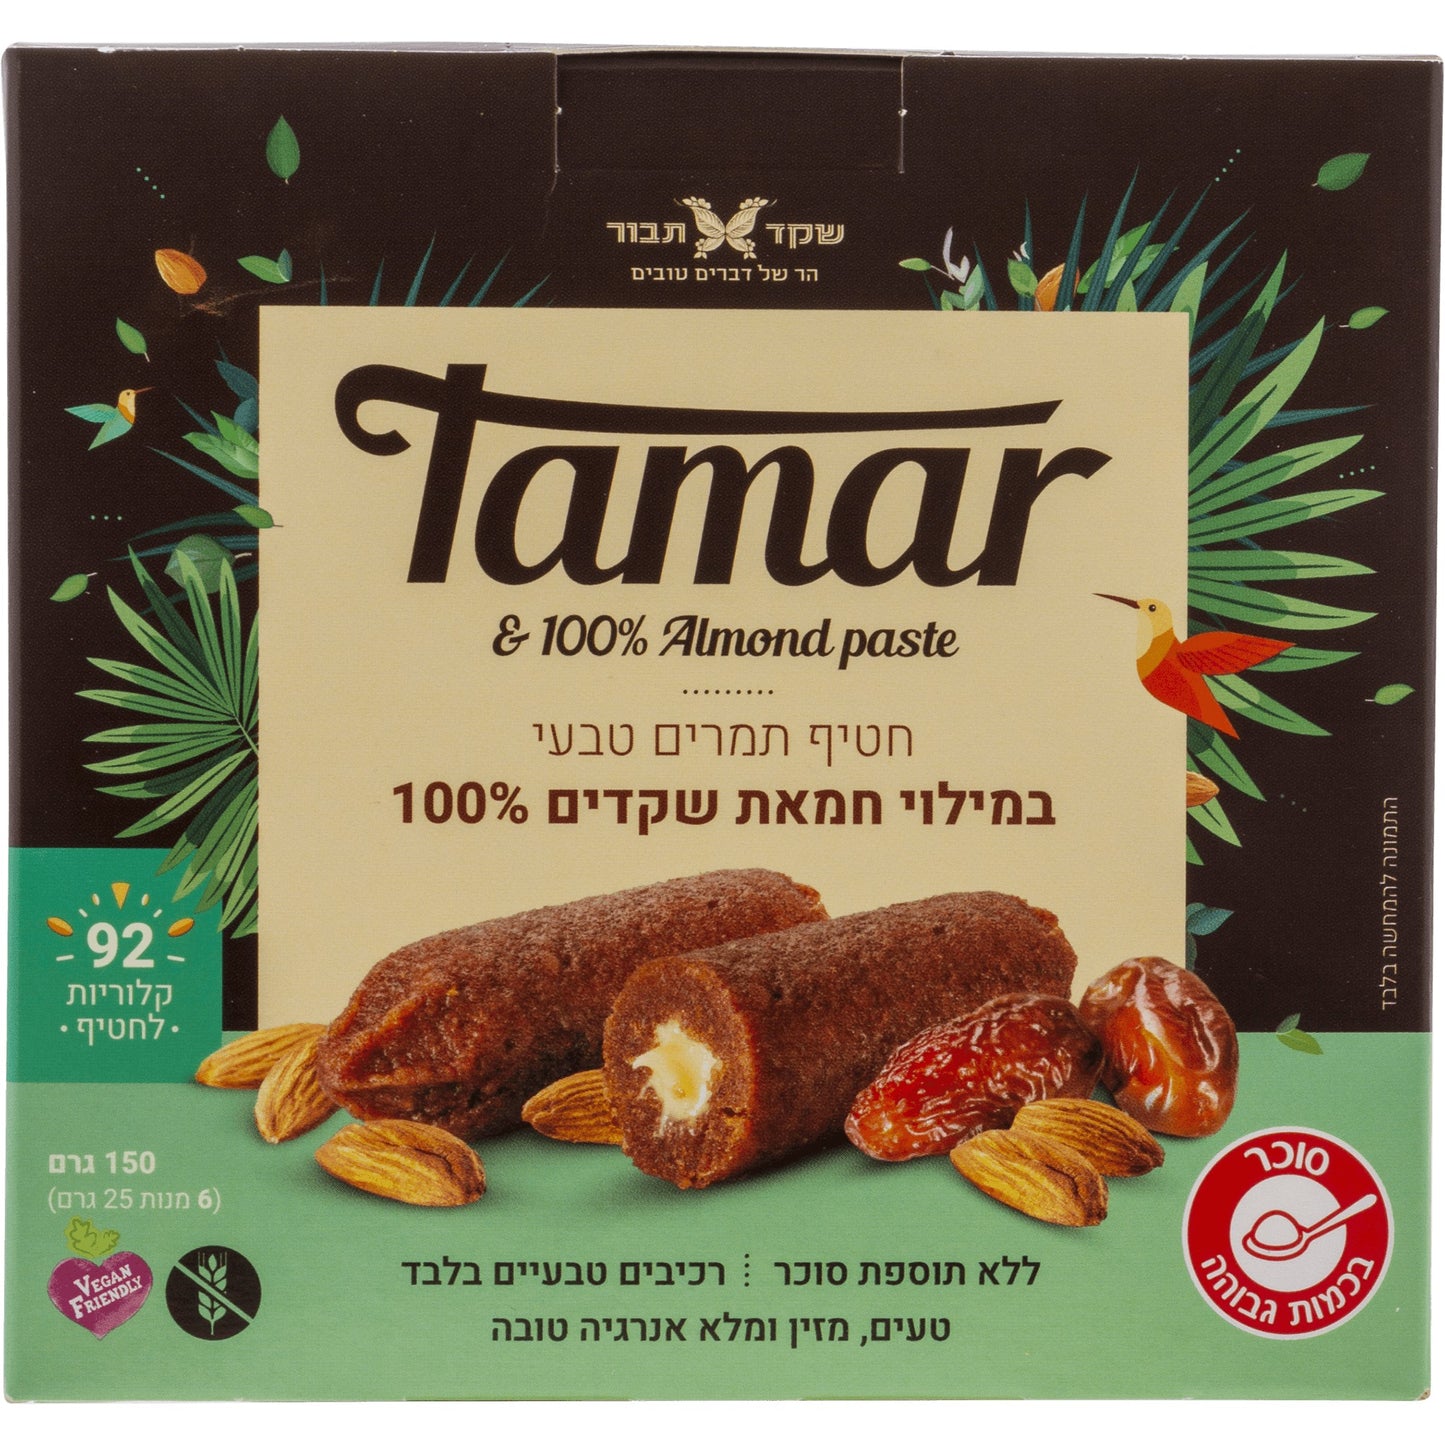 Tamar Dates with Almond paste filling 150 gr - Shaked Tavor - Israel Menu